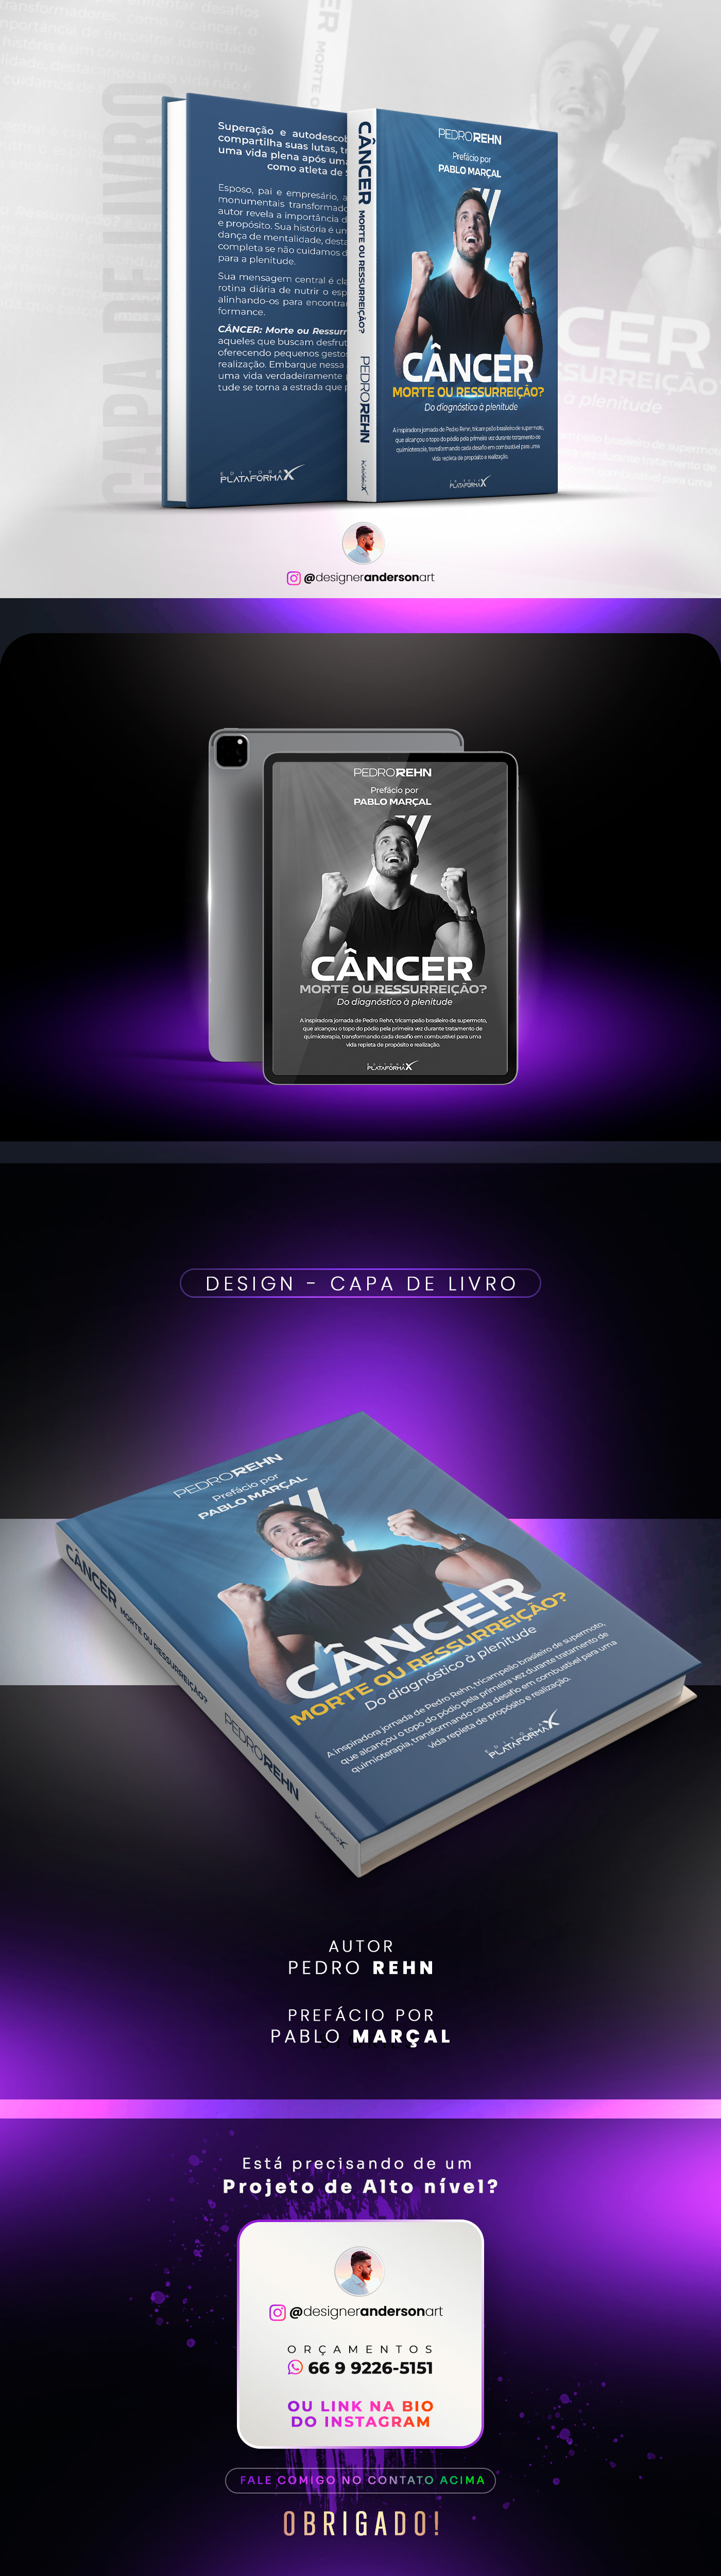 design capa de livro editorial design  book design books graphic design  editorial book InDesign capista